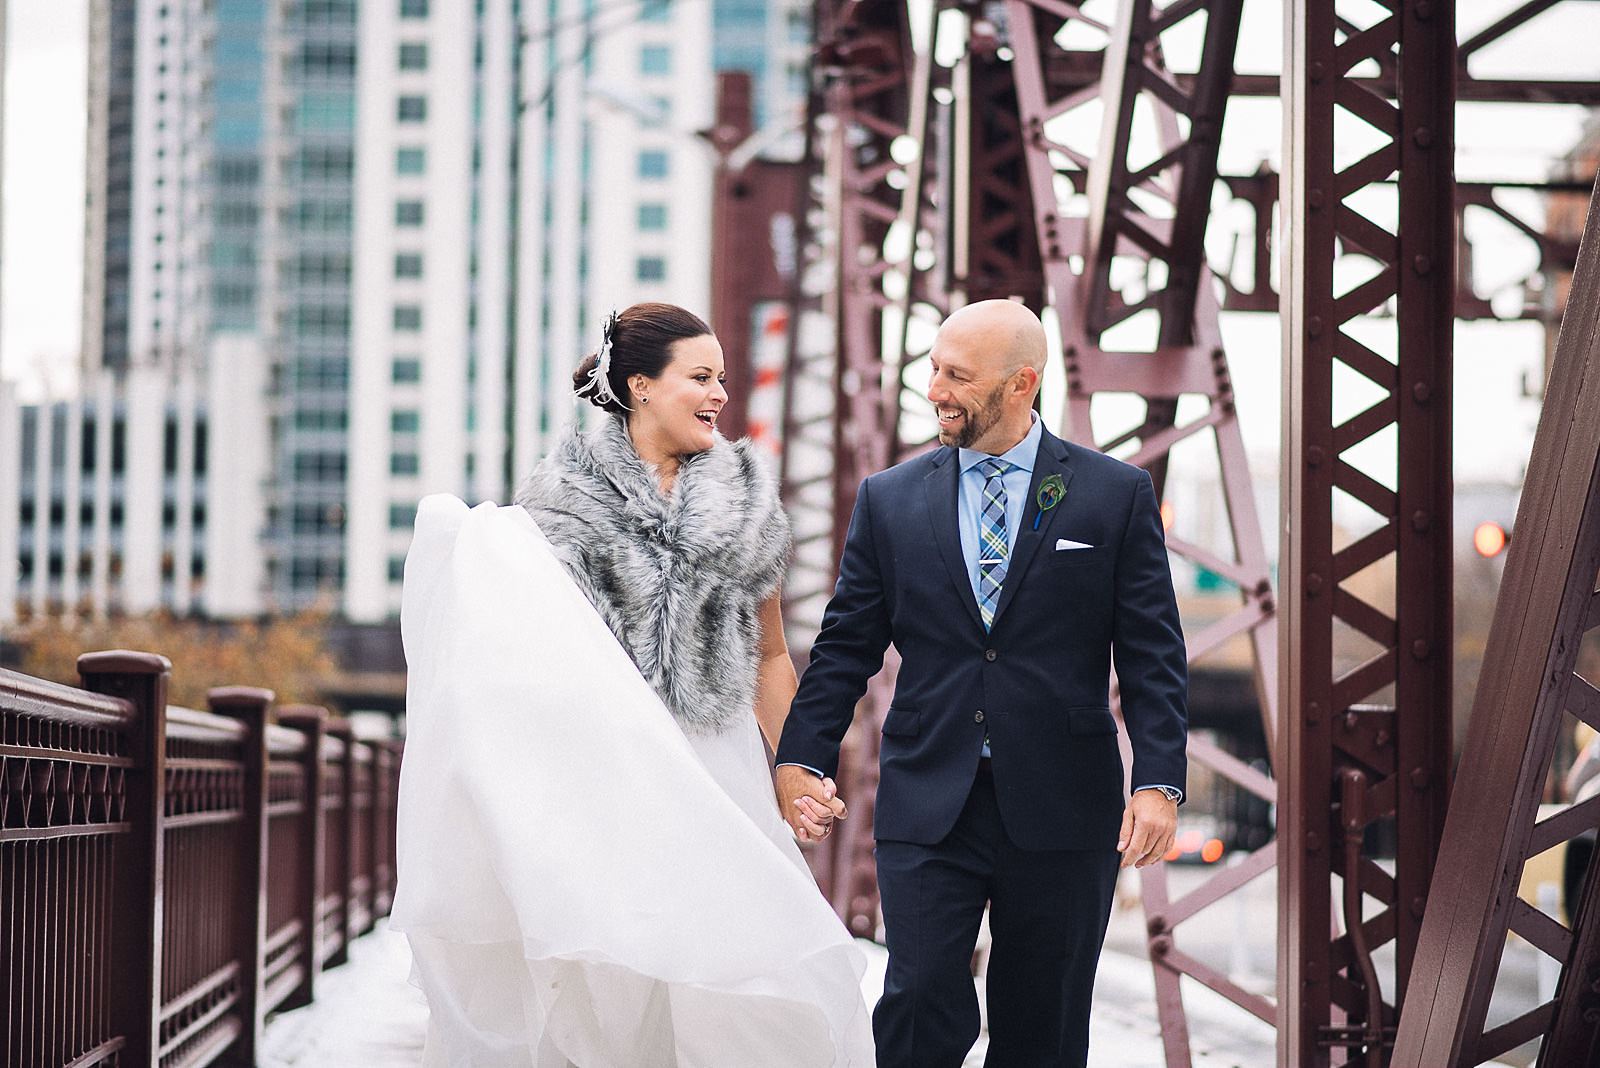 16 kinzie street bridge wedding photos - Salvatores Chicago Wedding Photos // Jen + Bob